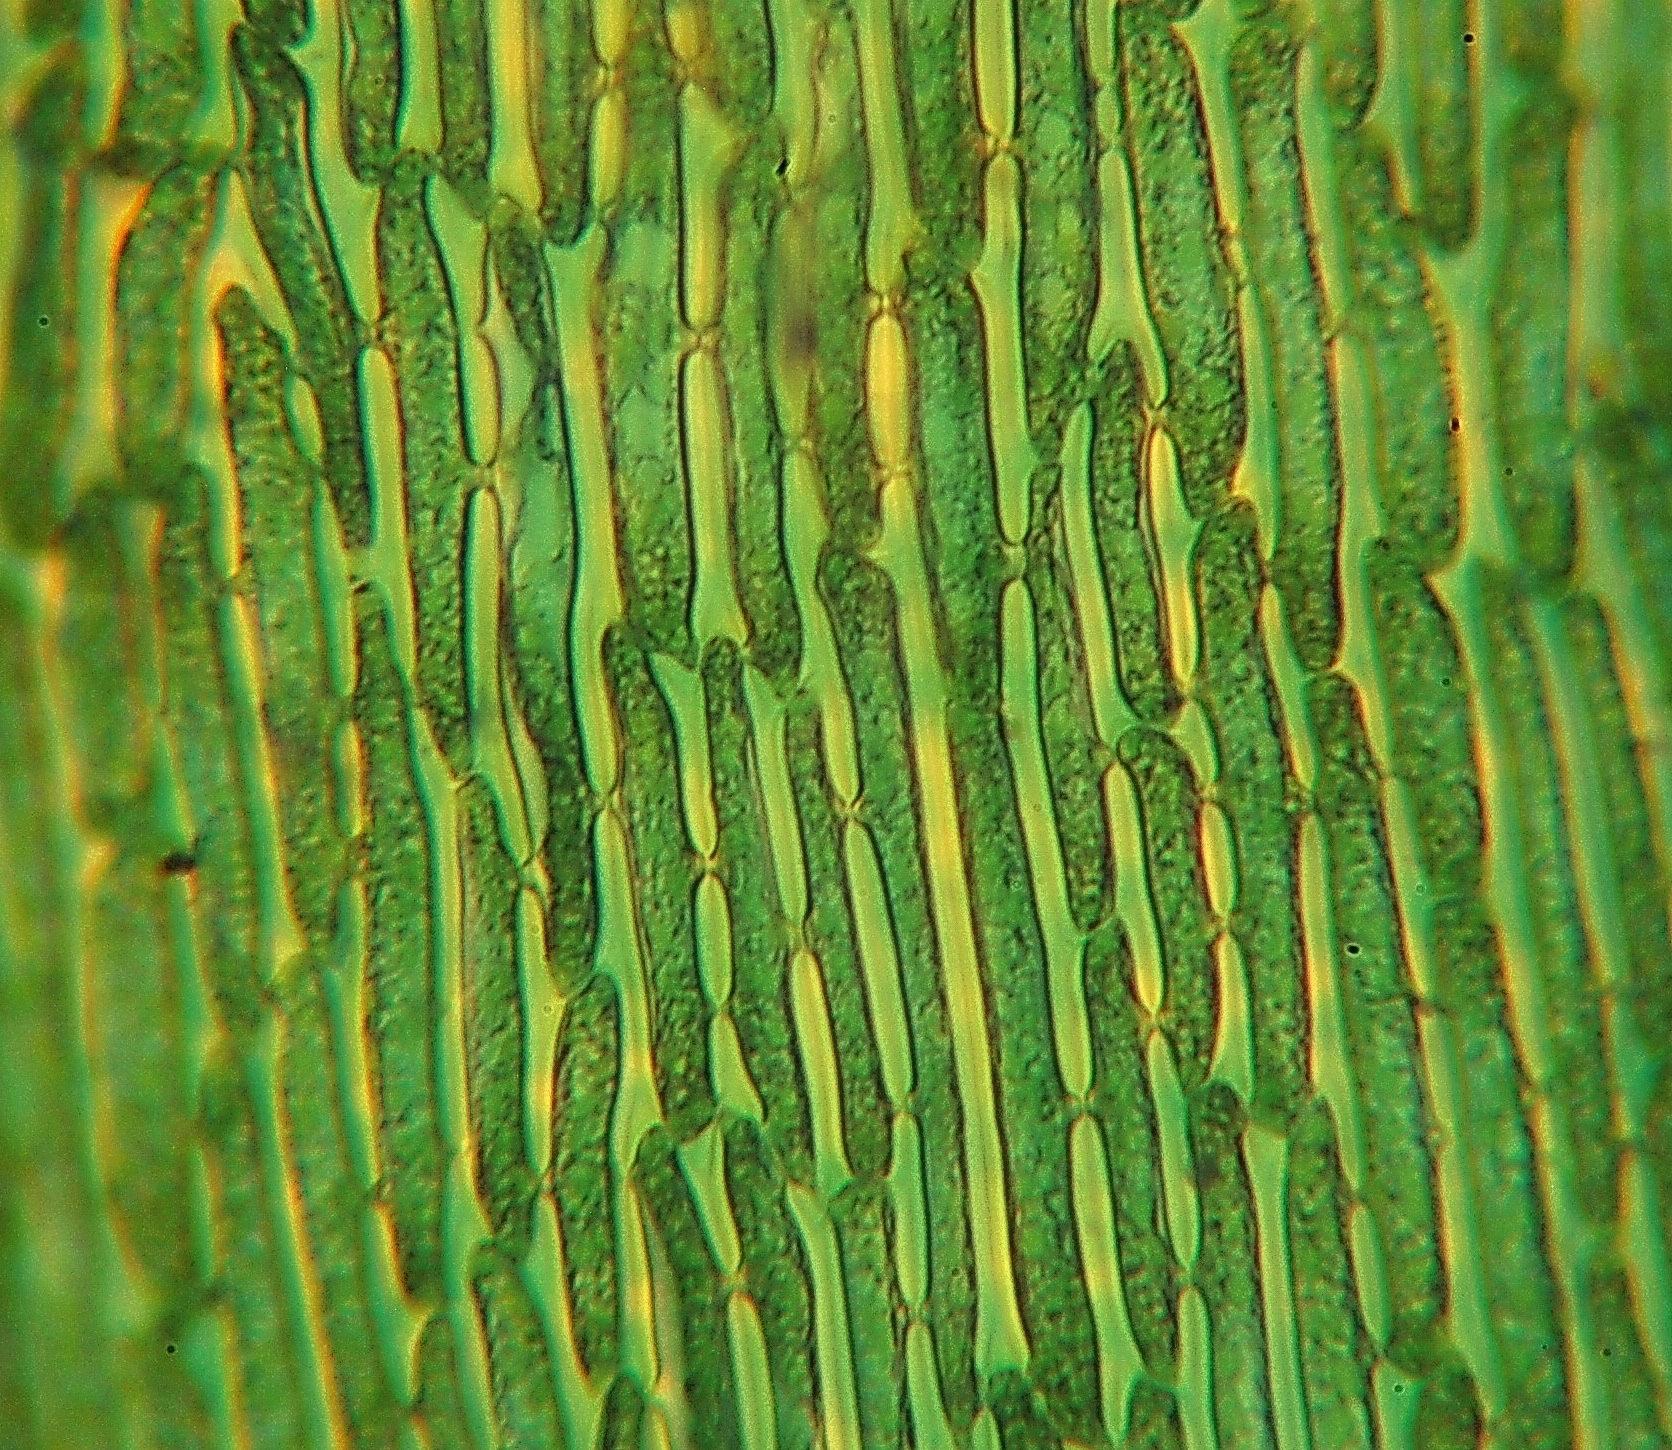 Dicranum-bonjeanii-leaf-cells-1.jpg